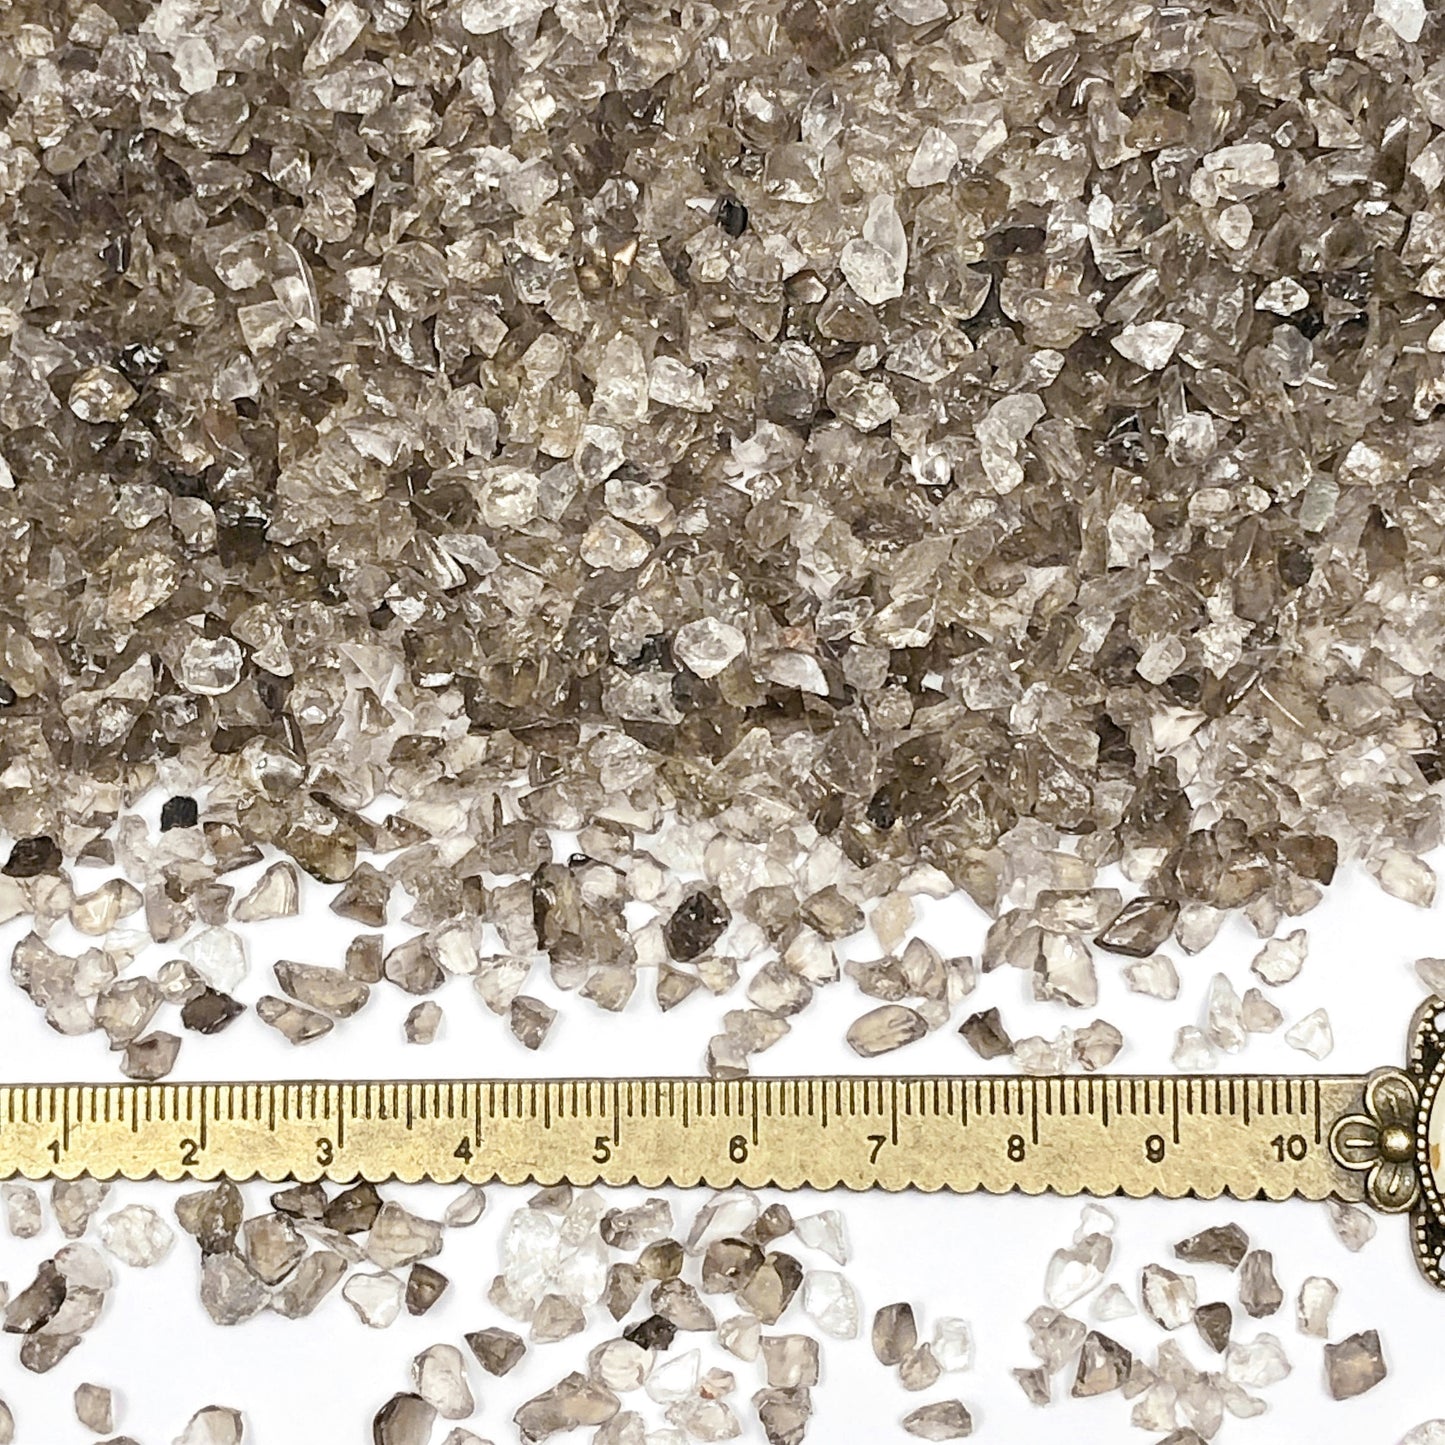 Crushed Smoky Quartz (Grade A) from Brazil, Coarse Crush, Gravel Size, 4mm - 2mm